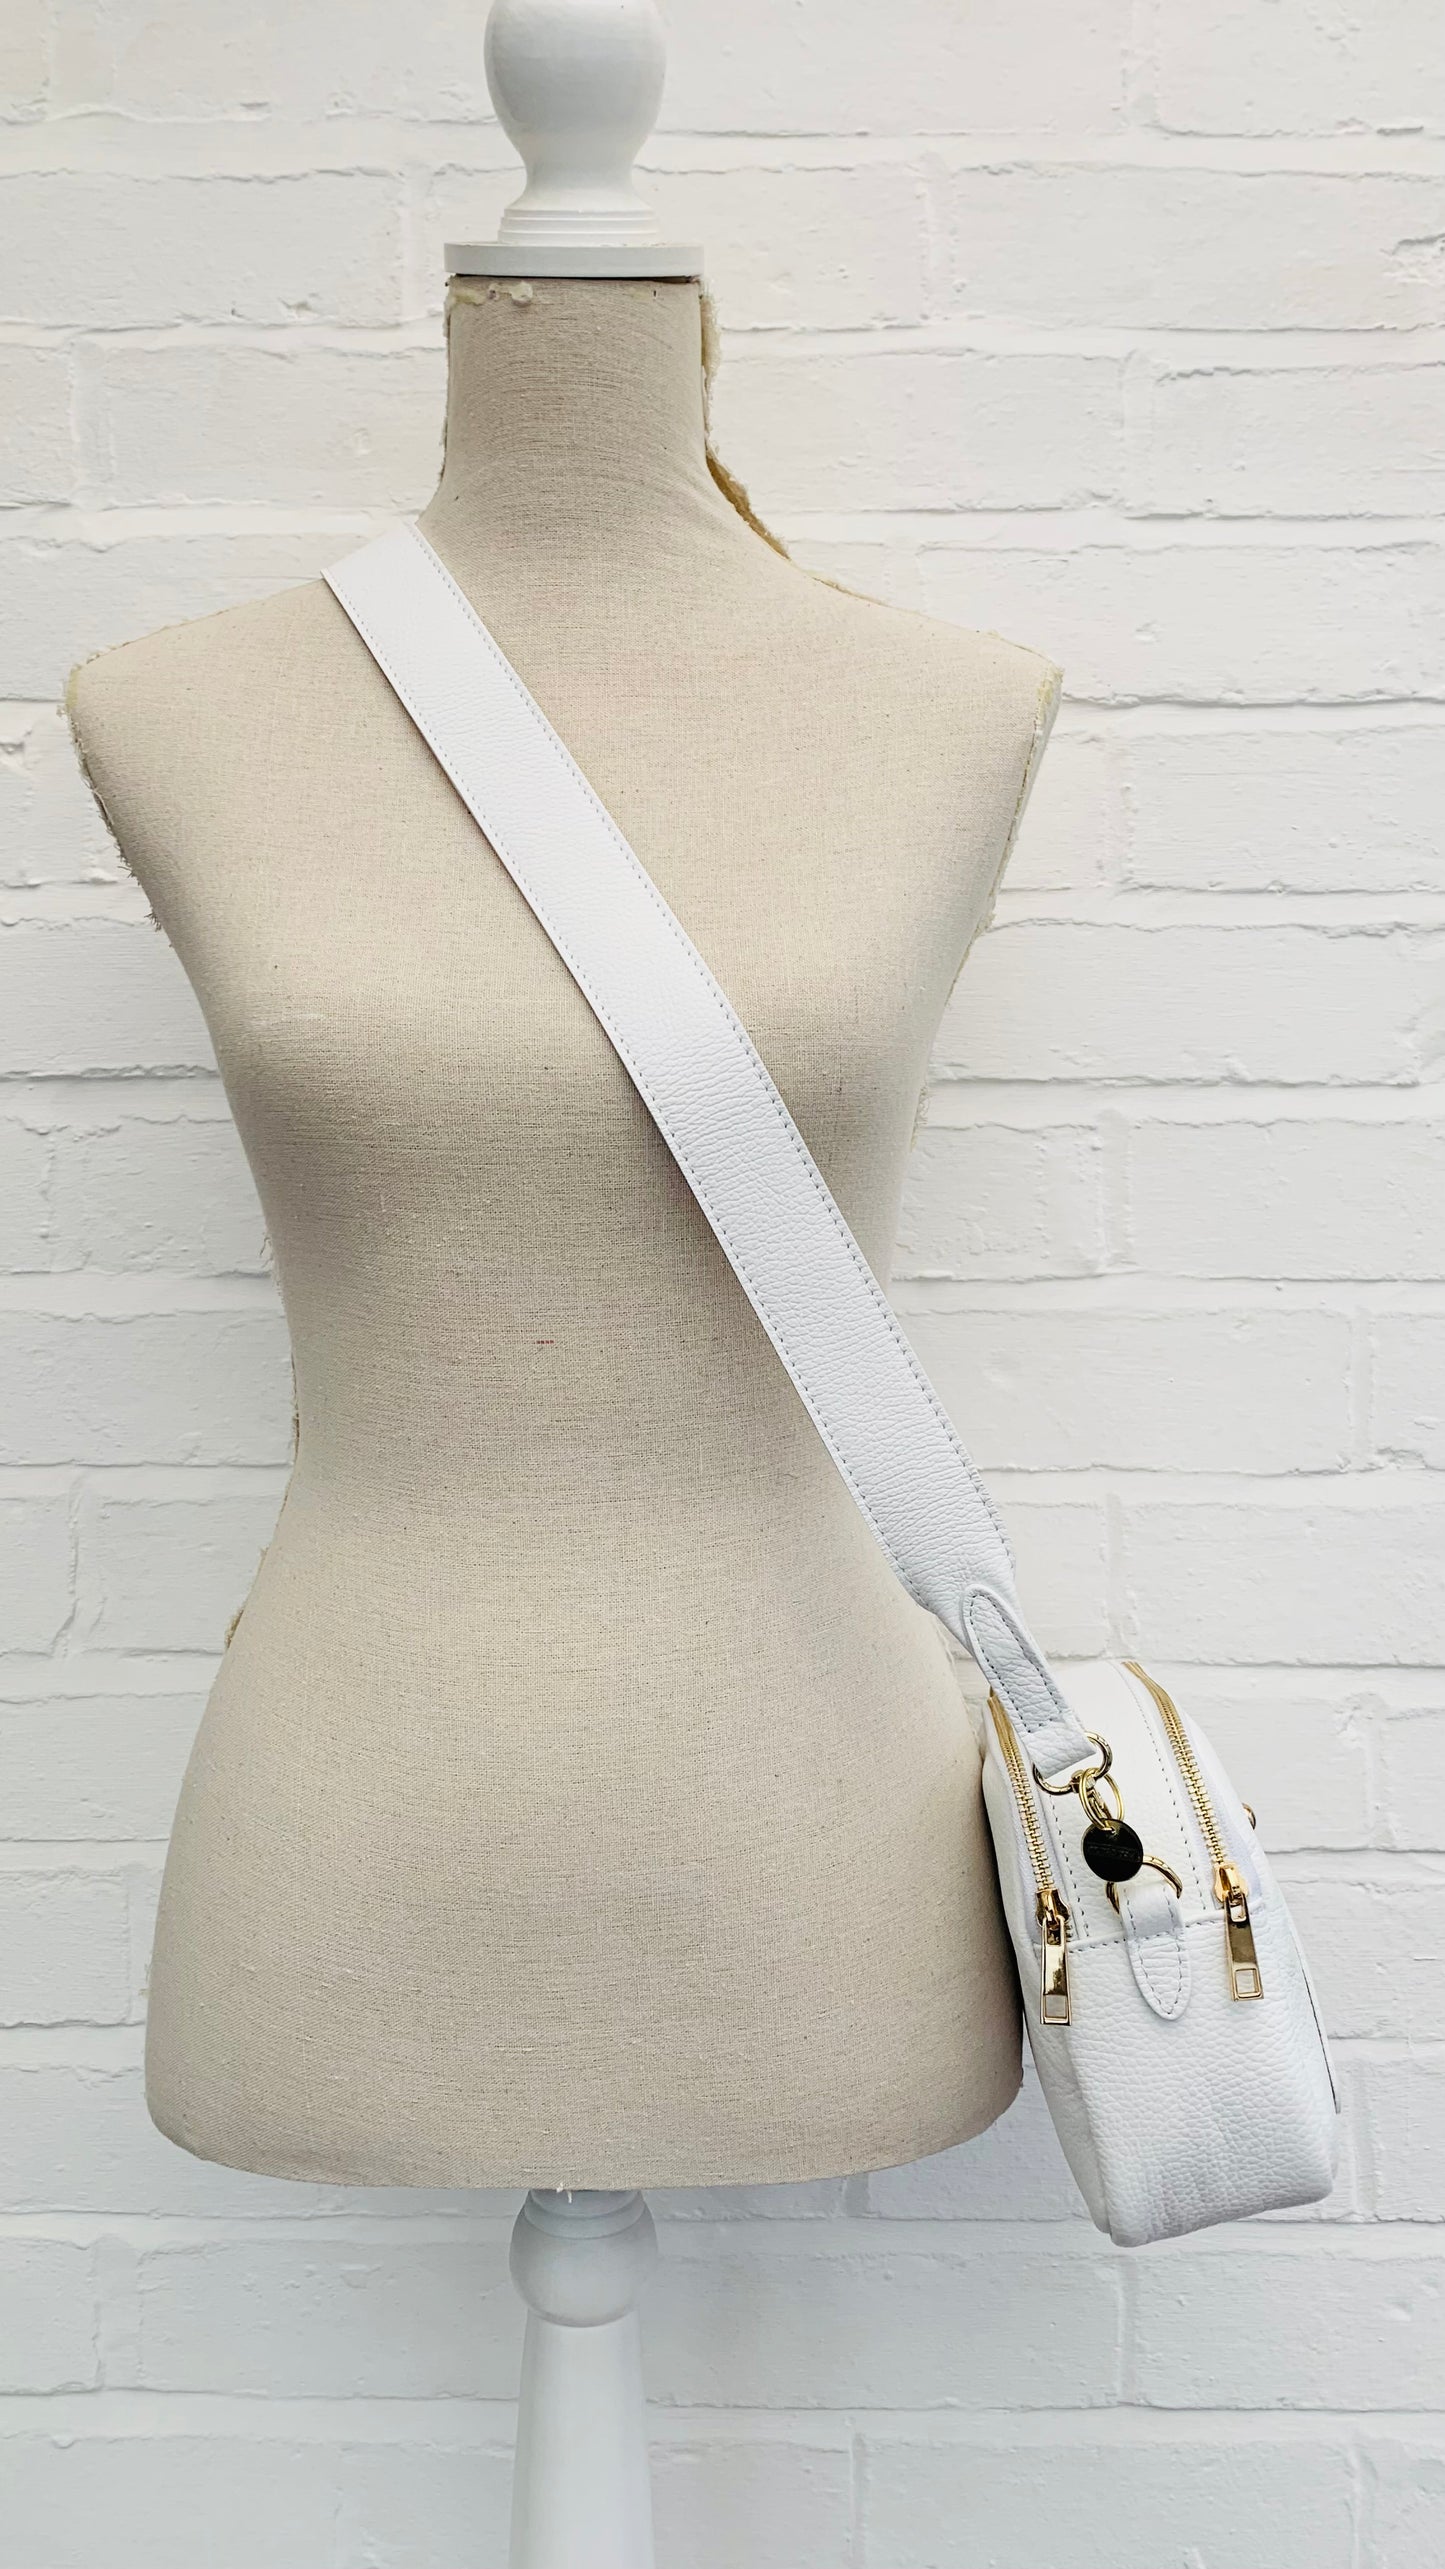 White Leather Double Zip Bag - Victoria